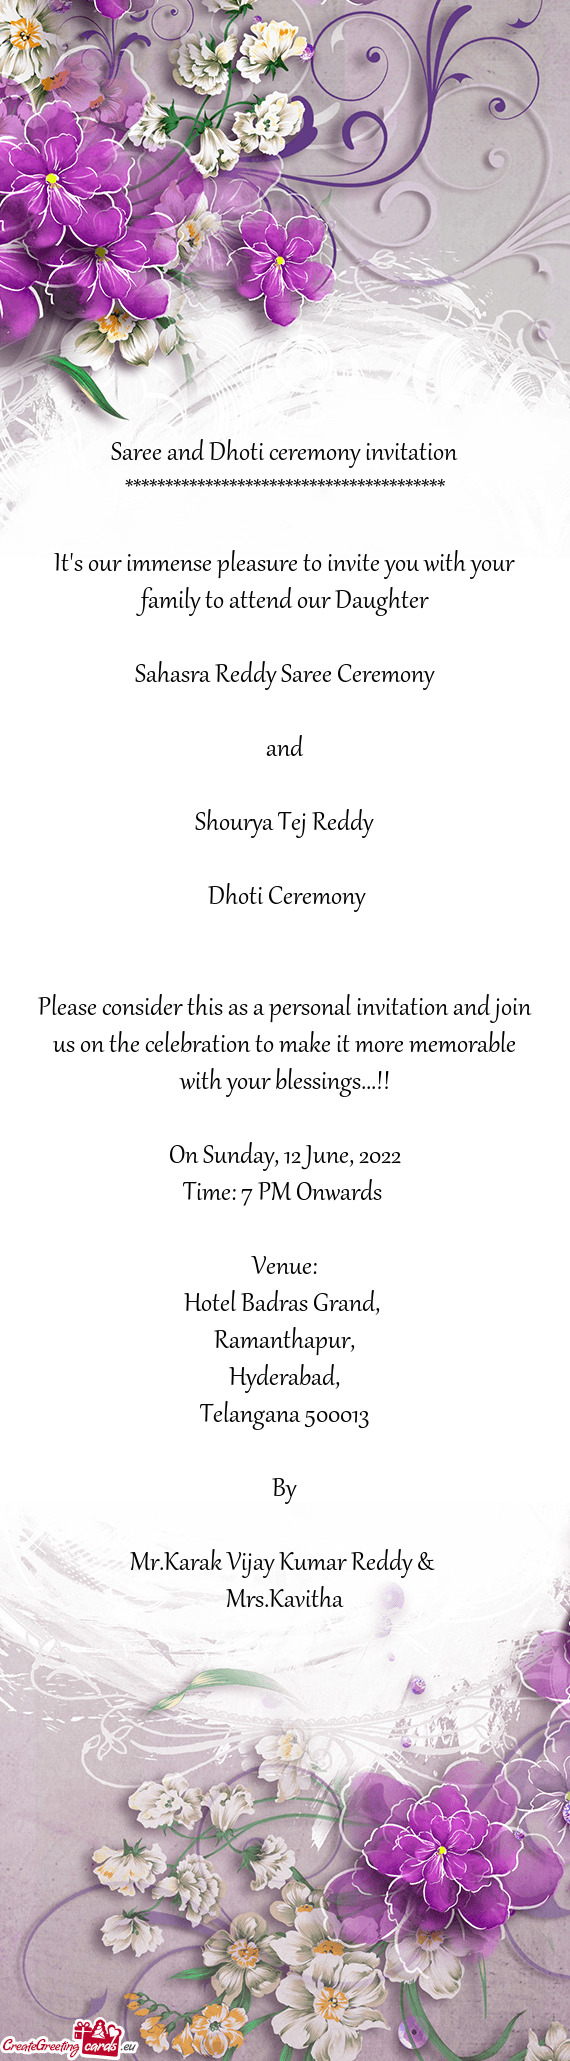 Sahasra Reddy Saree Ceremony